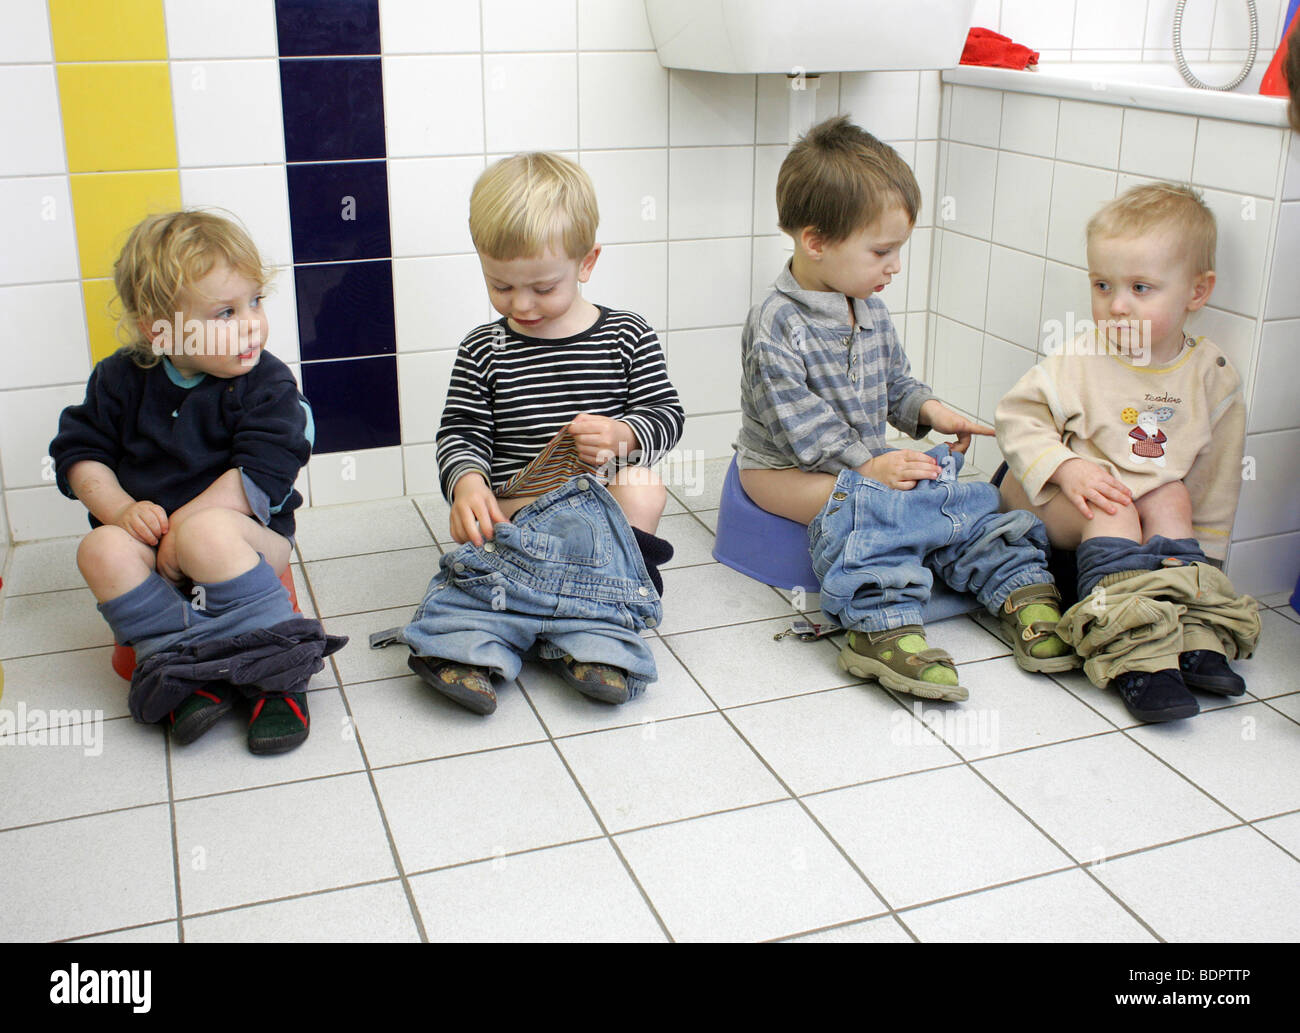 Kinder auf den Topf Stockfotografie - Alamy